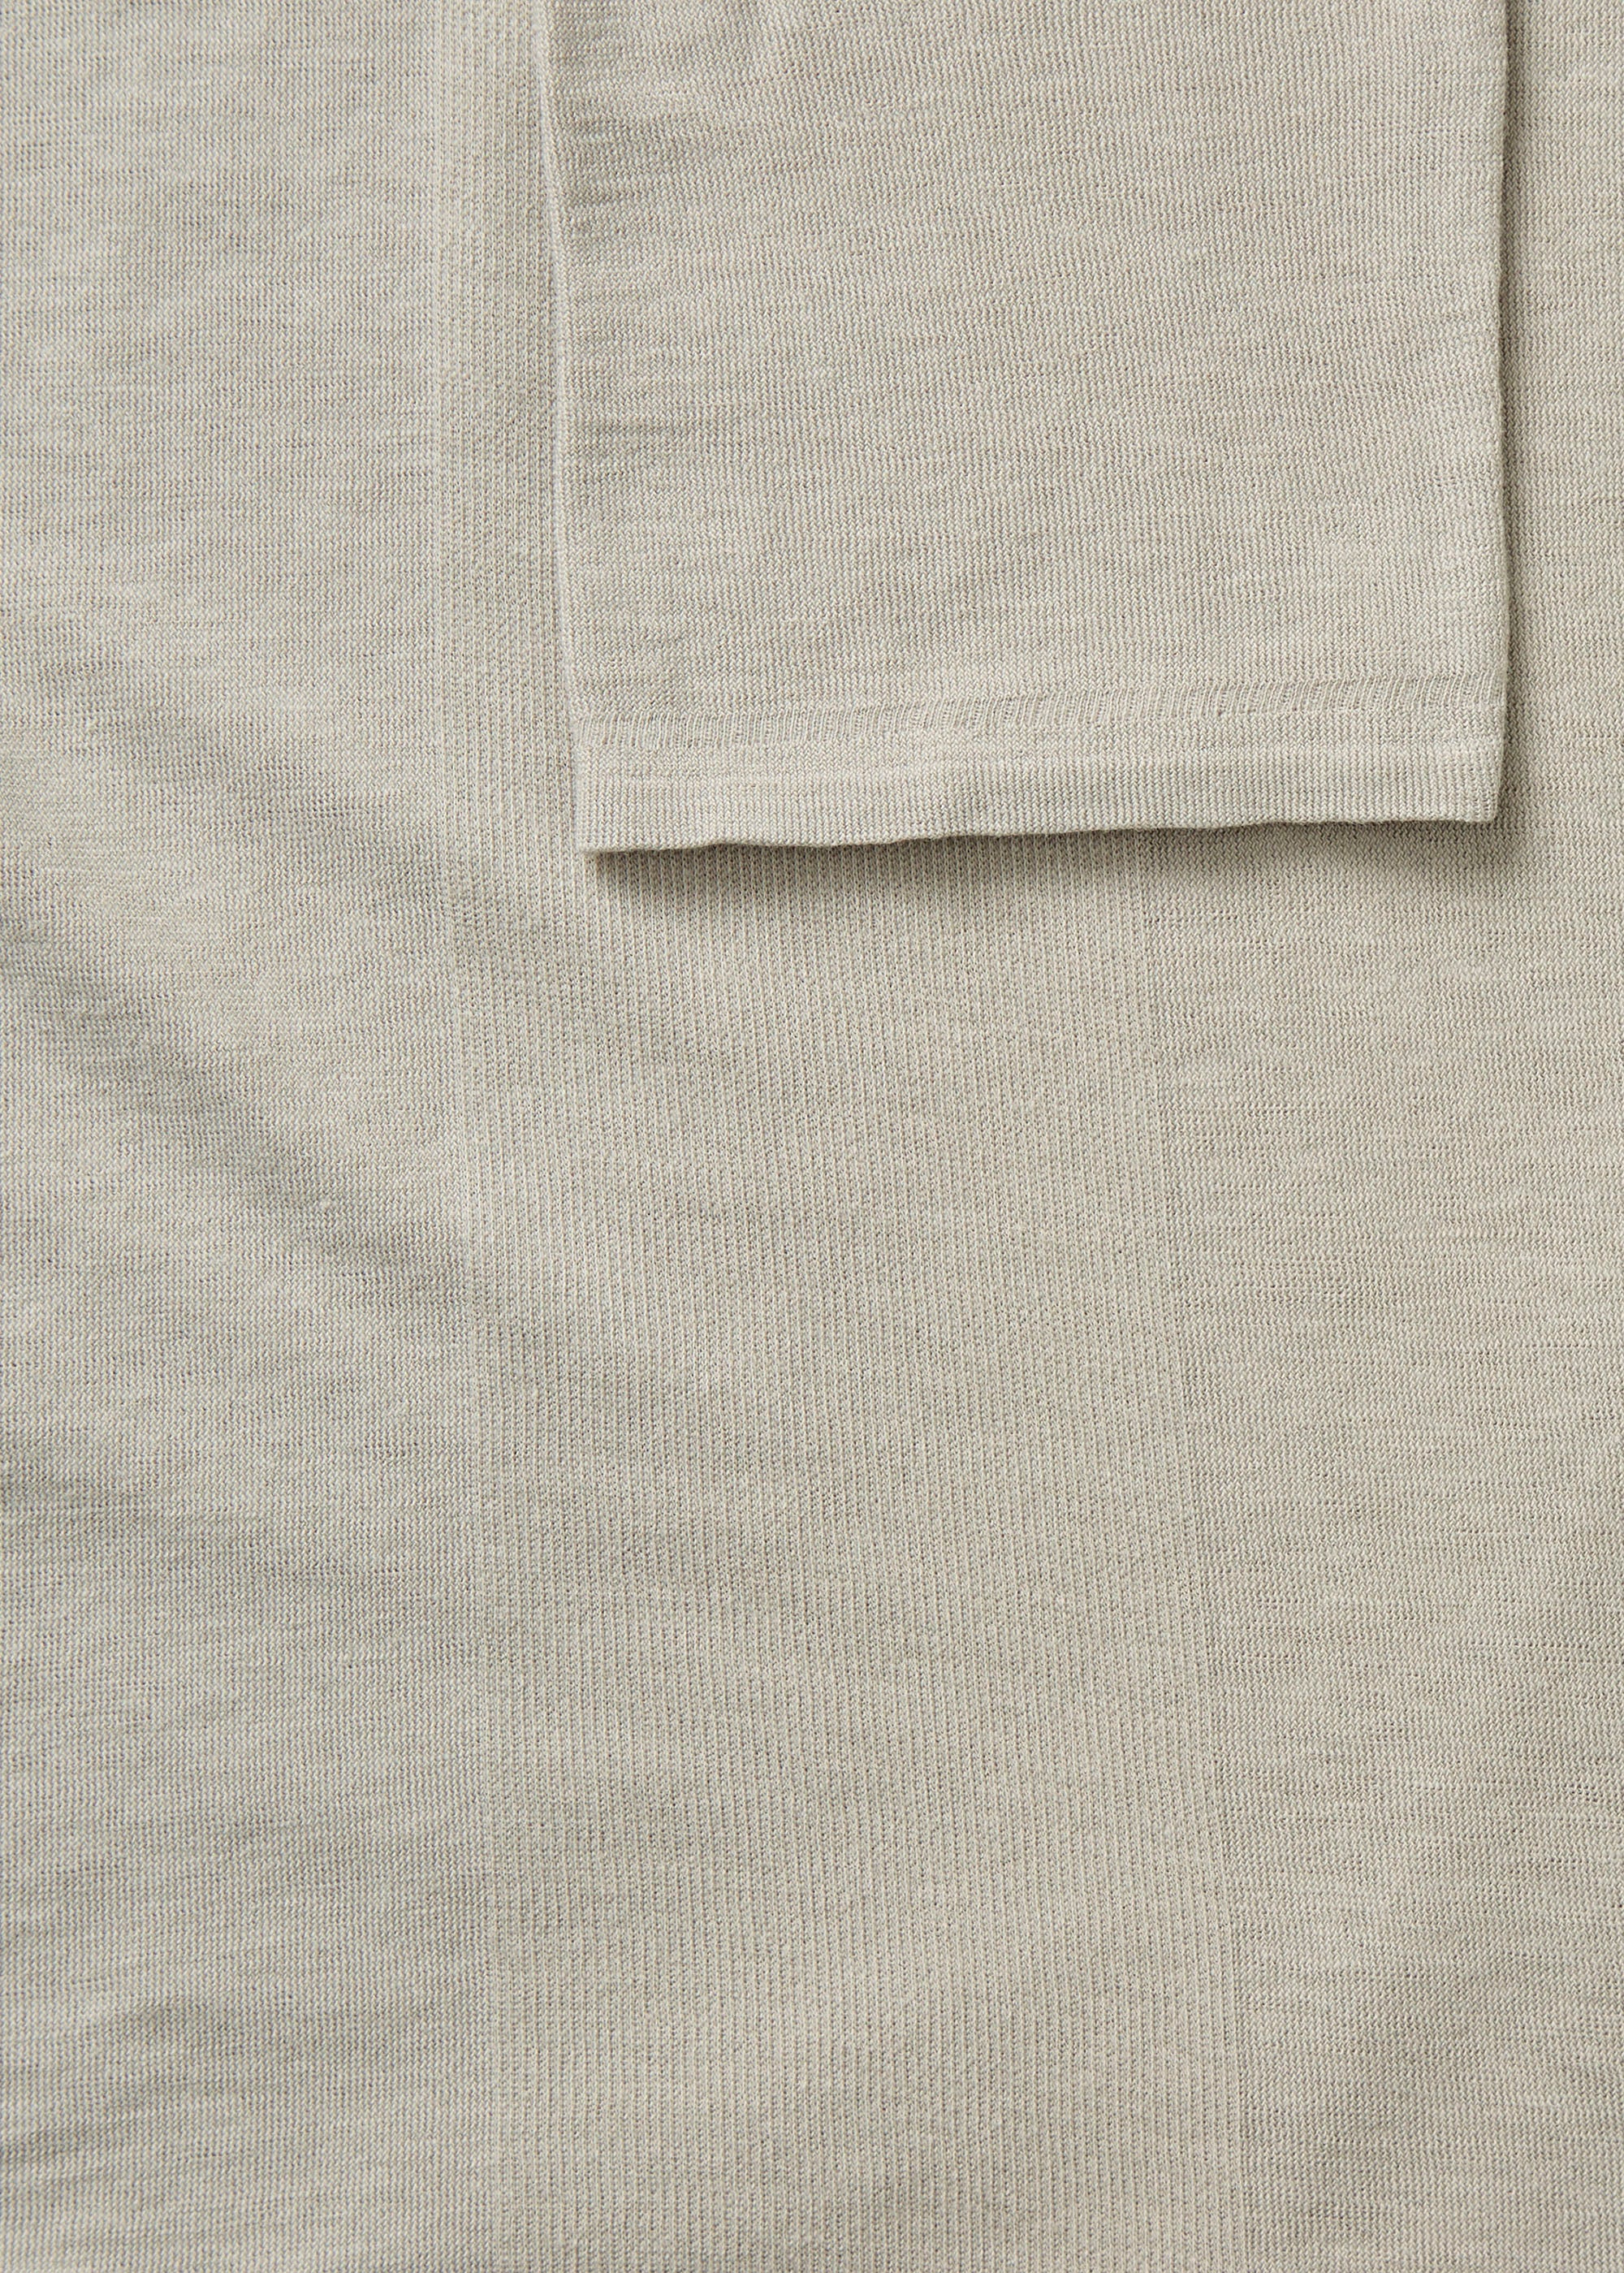 Gentle cashmere long sleeve | Grey